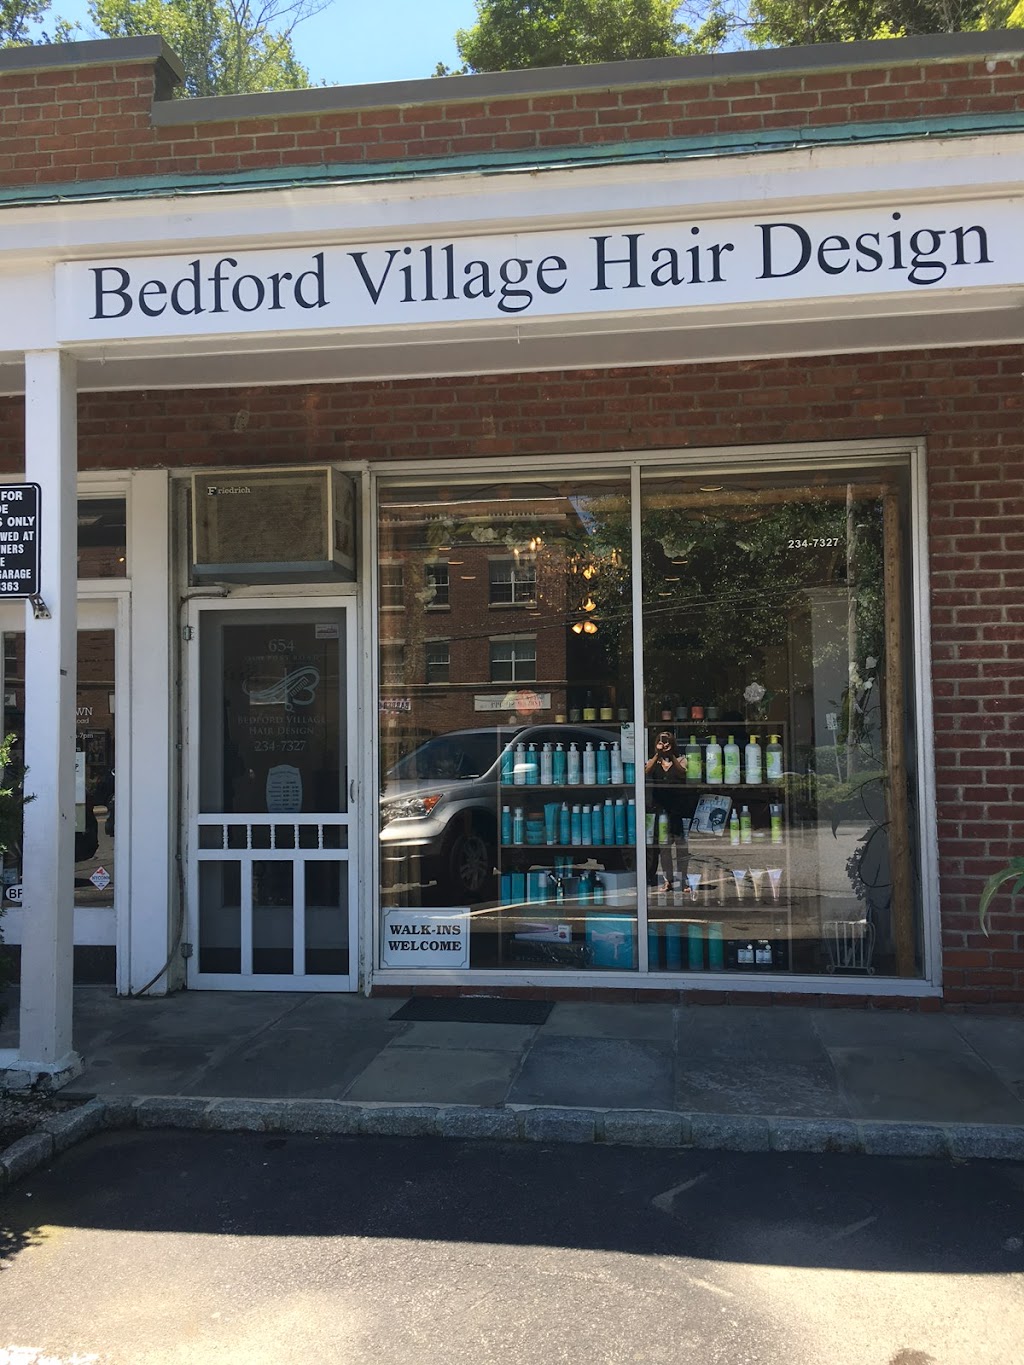 Bedford Village Hair Design | 654 Old Post Rd, Bedford, NY 10506 | Phone: (914) 234-7327